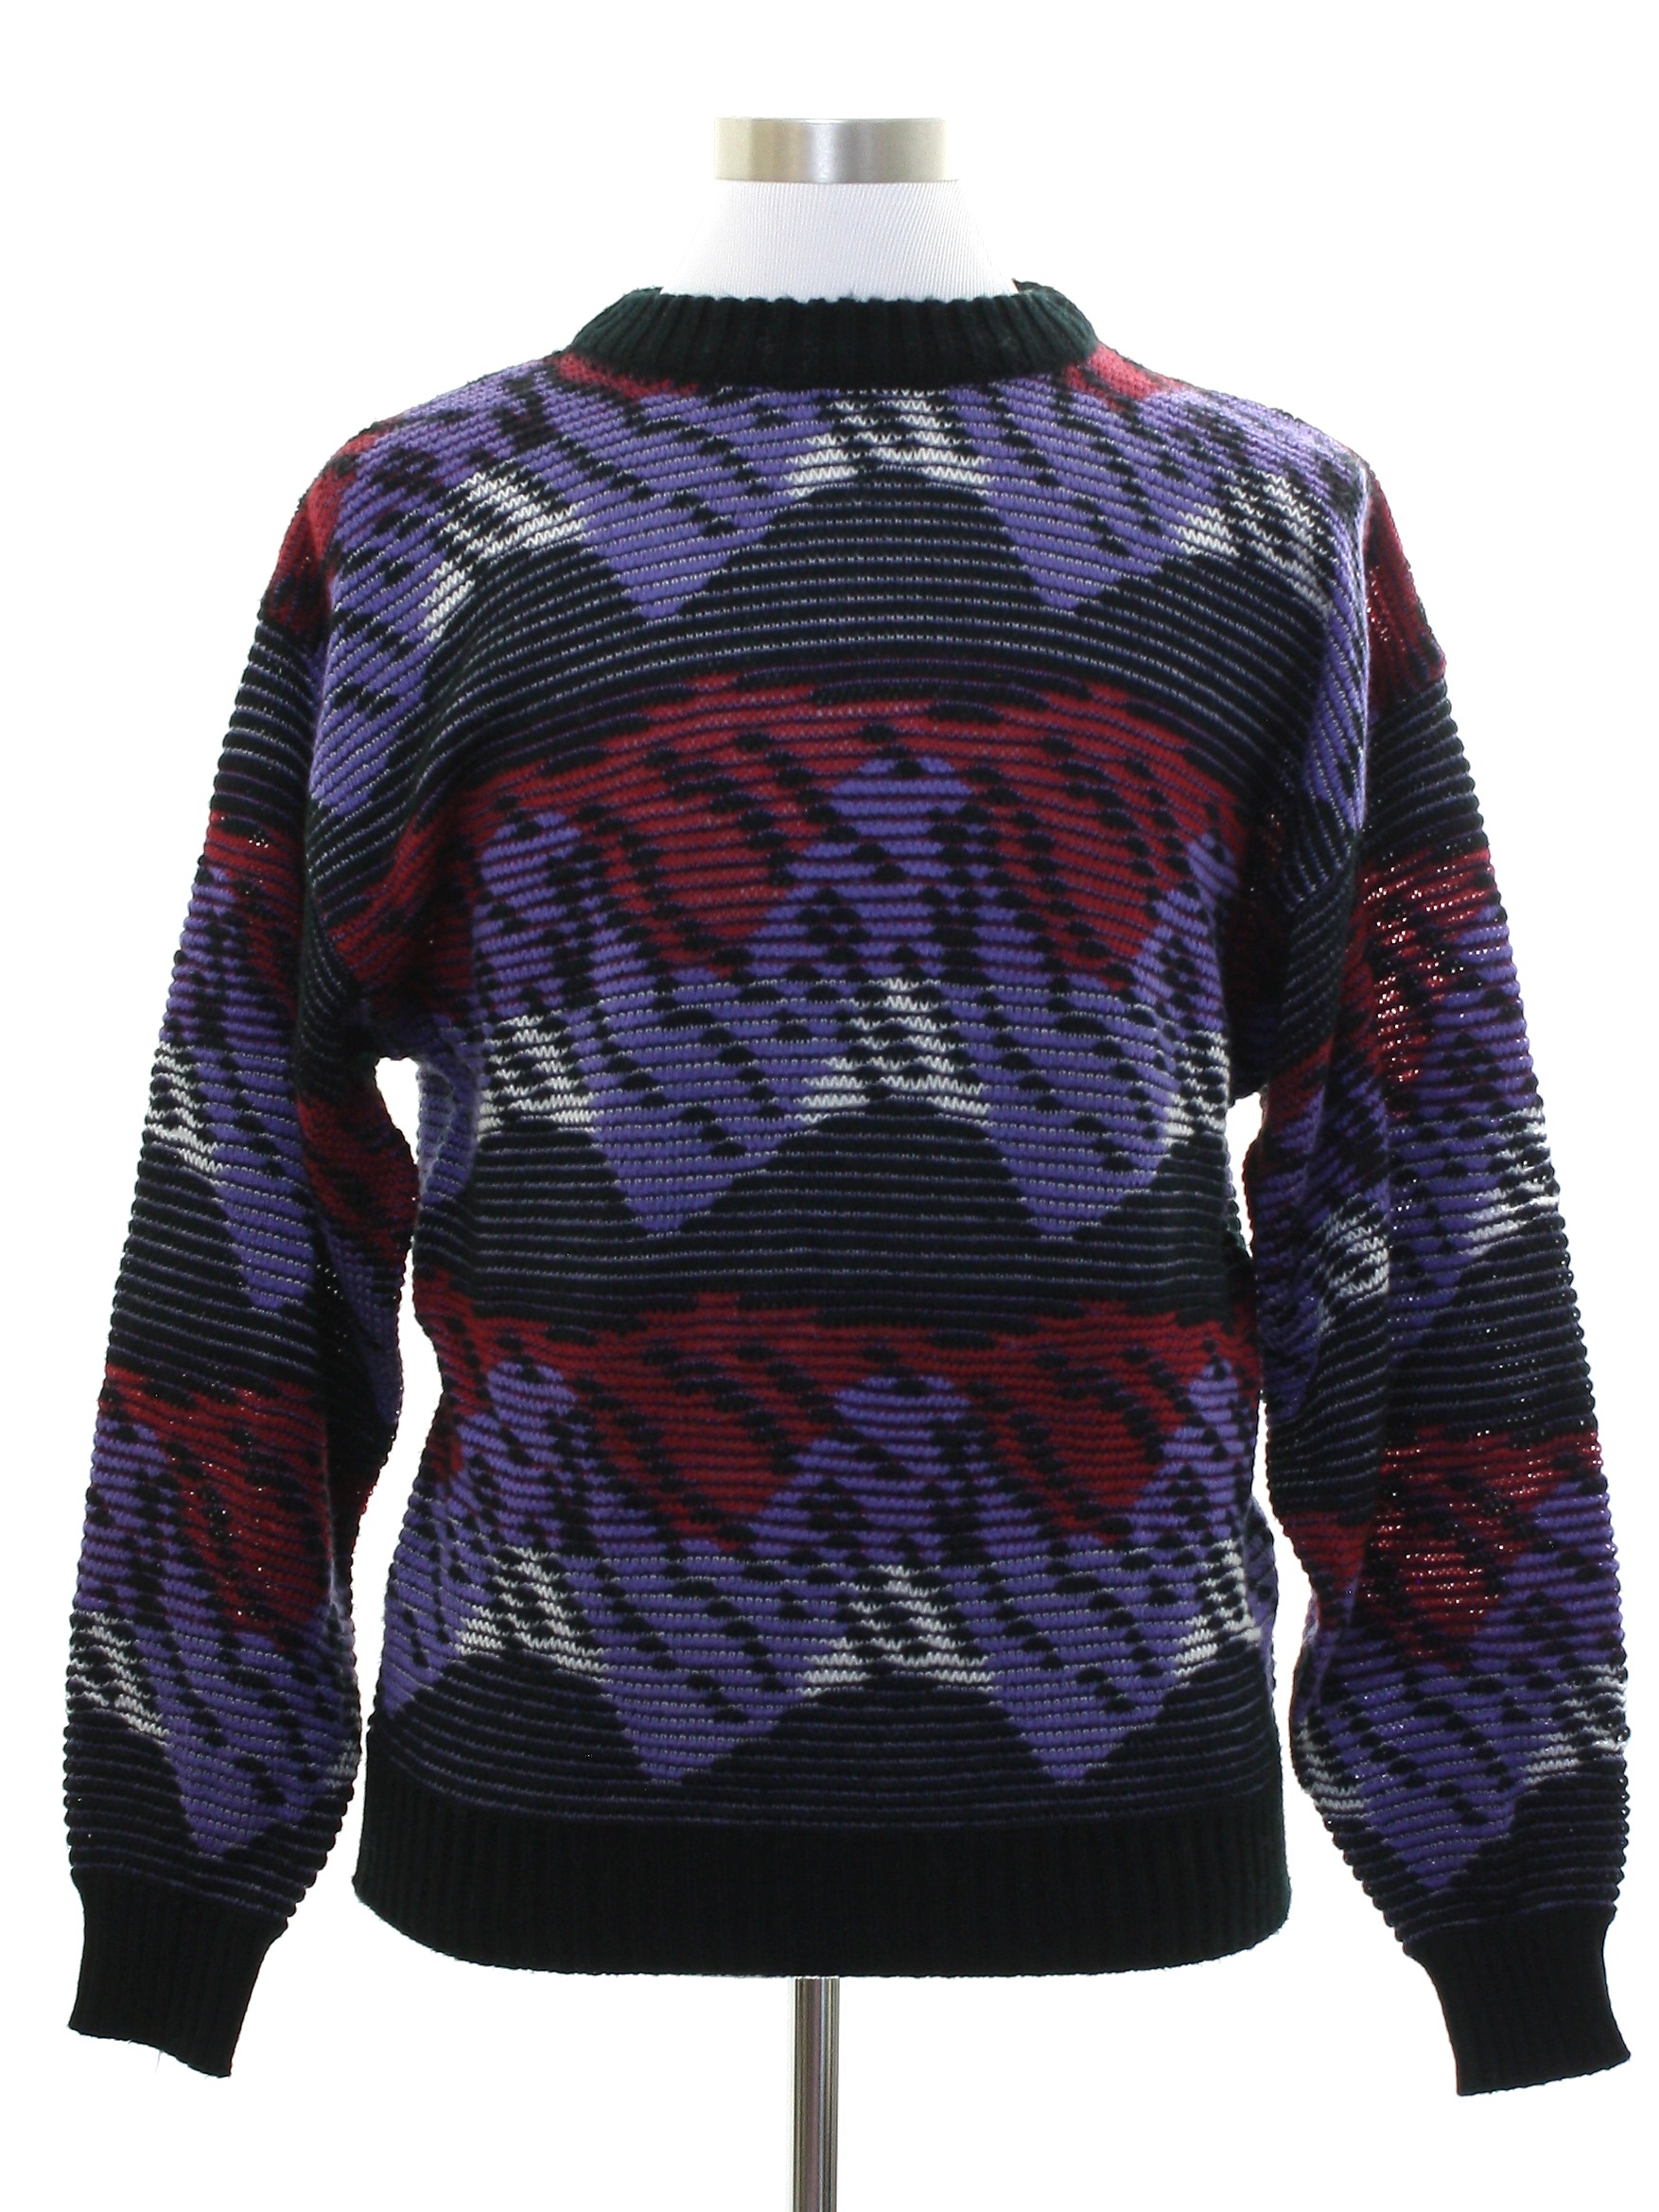 Retro 1980s Sweater: 80s -Saturdays- Mens black background acrylic ...